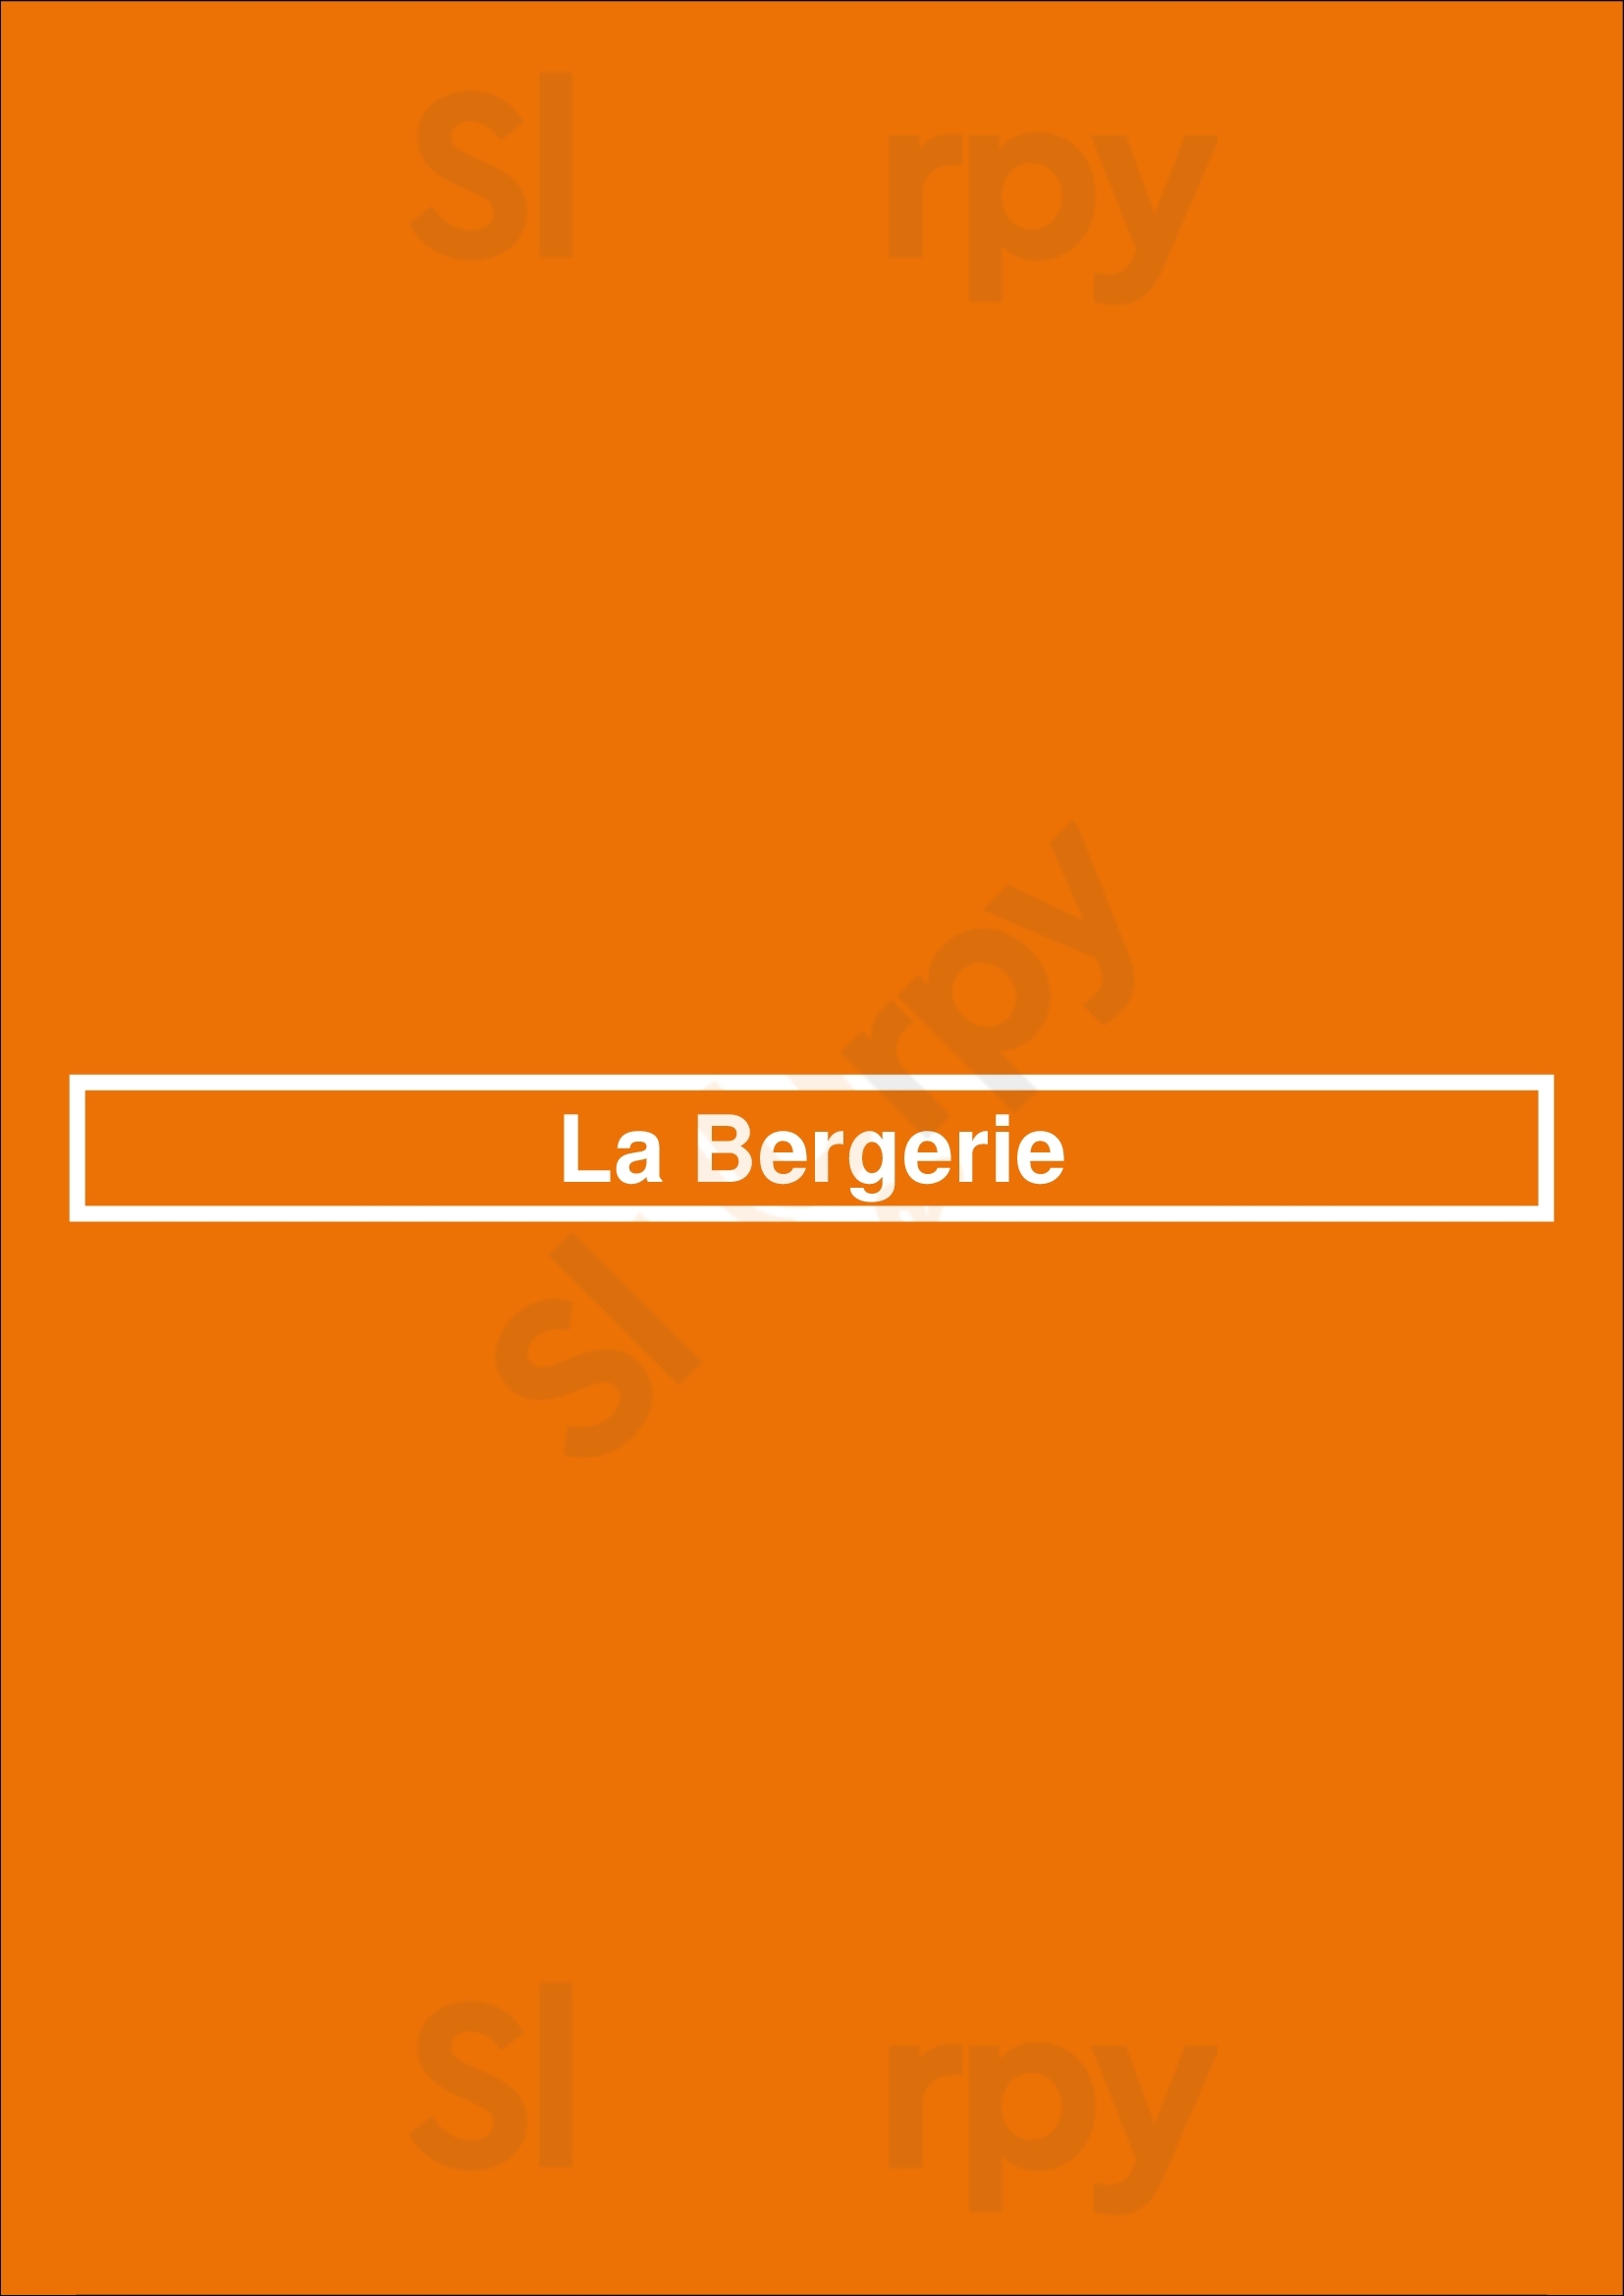 La Bergerie Mons Menu - 1